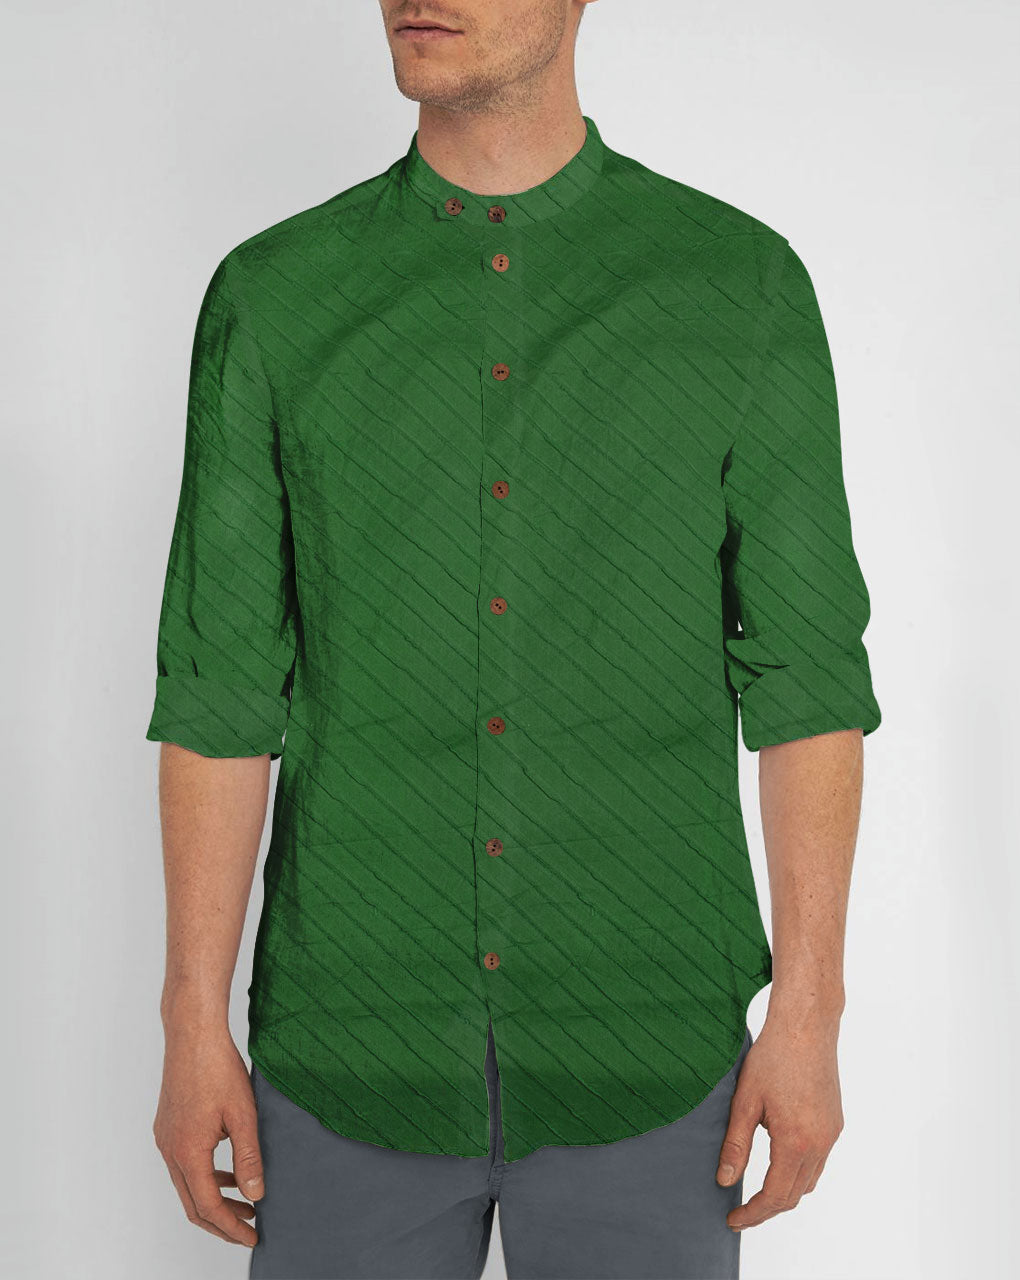 Green Pin-Tucks Cotton Fabric ( Width 40 Inch ) - Fabriclore.com